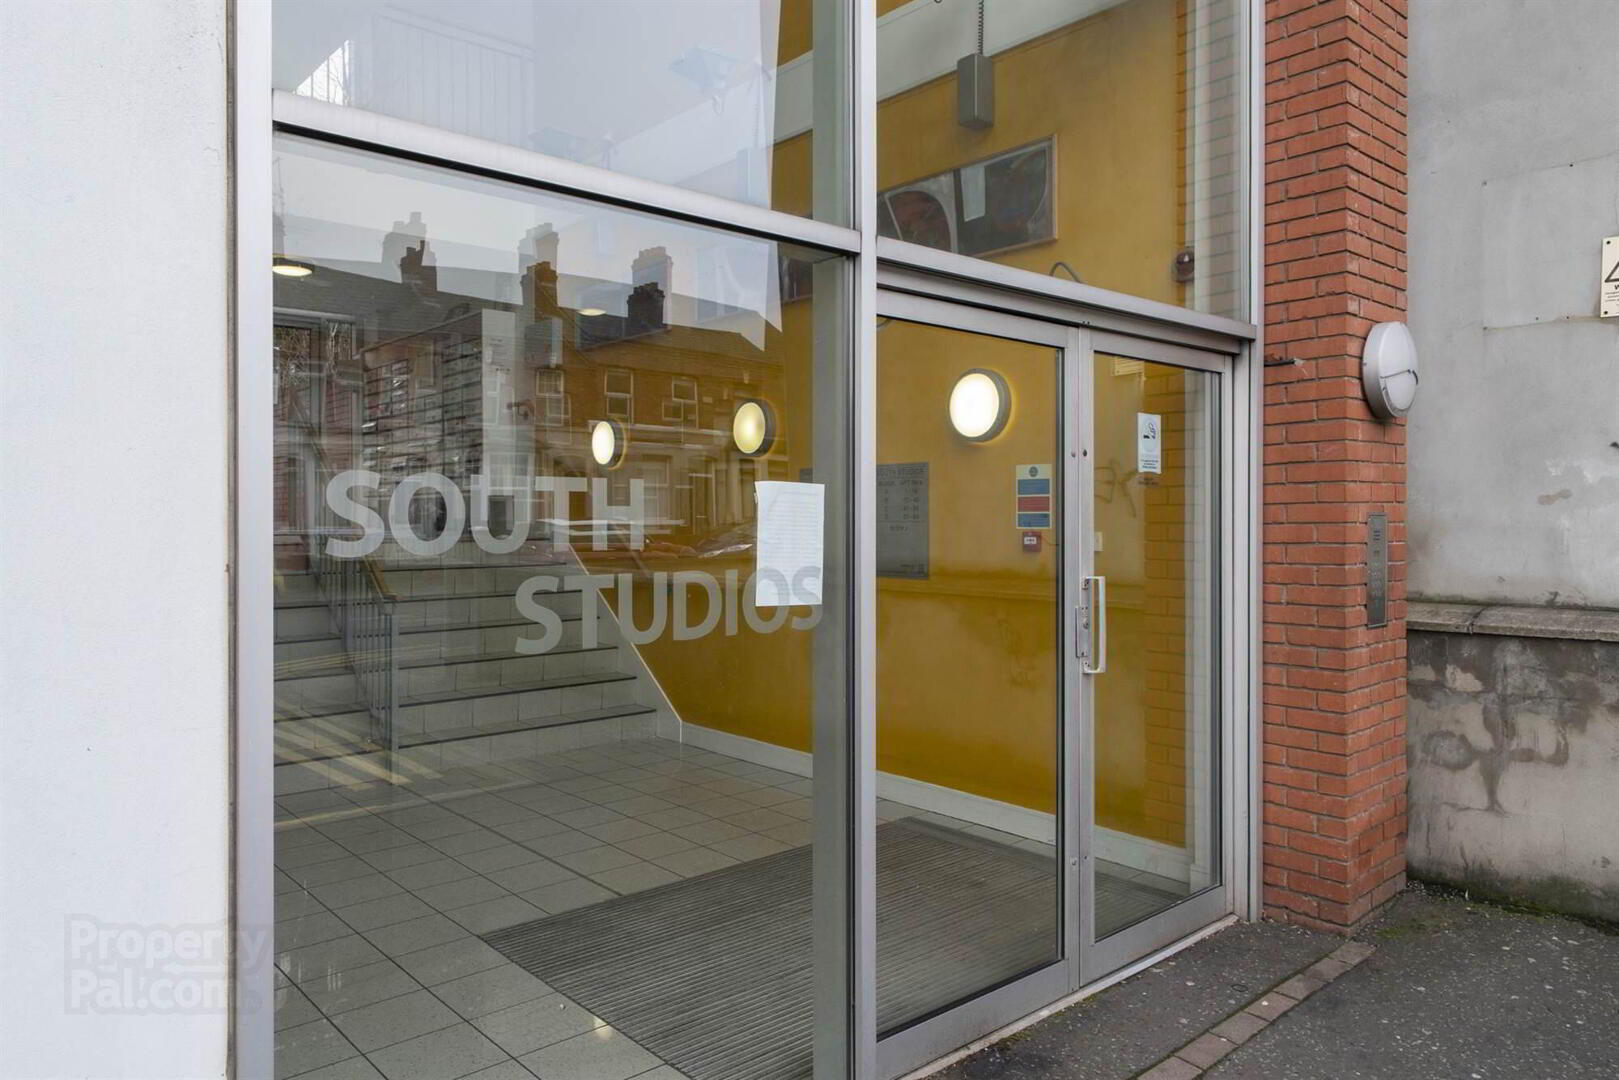 39 South Studios